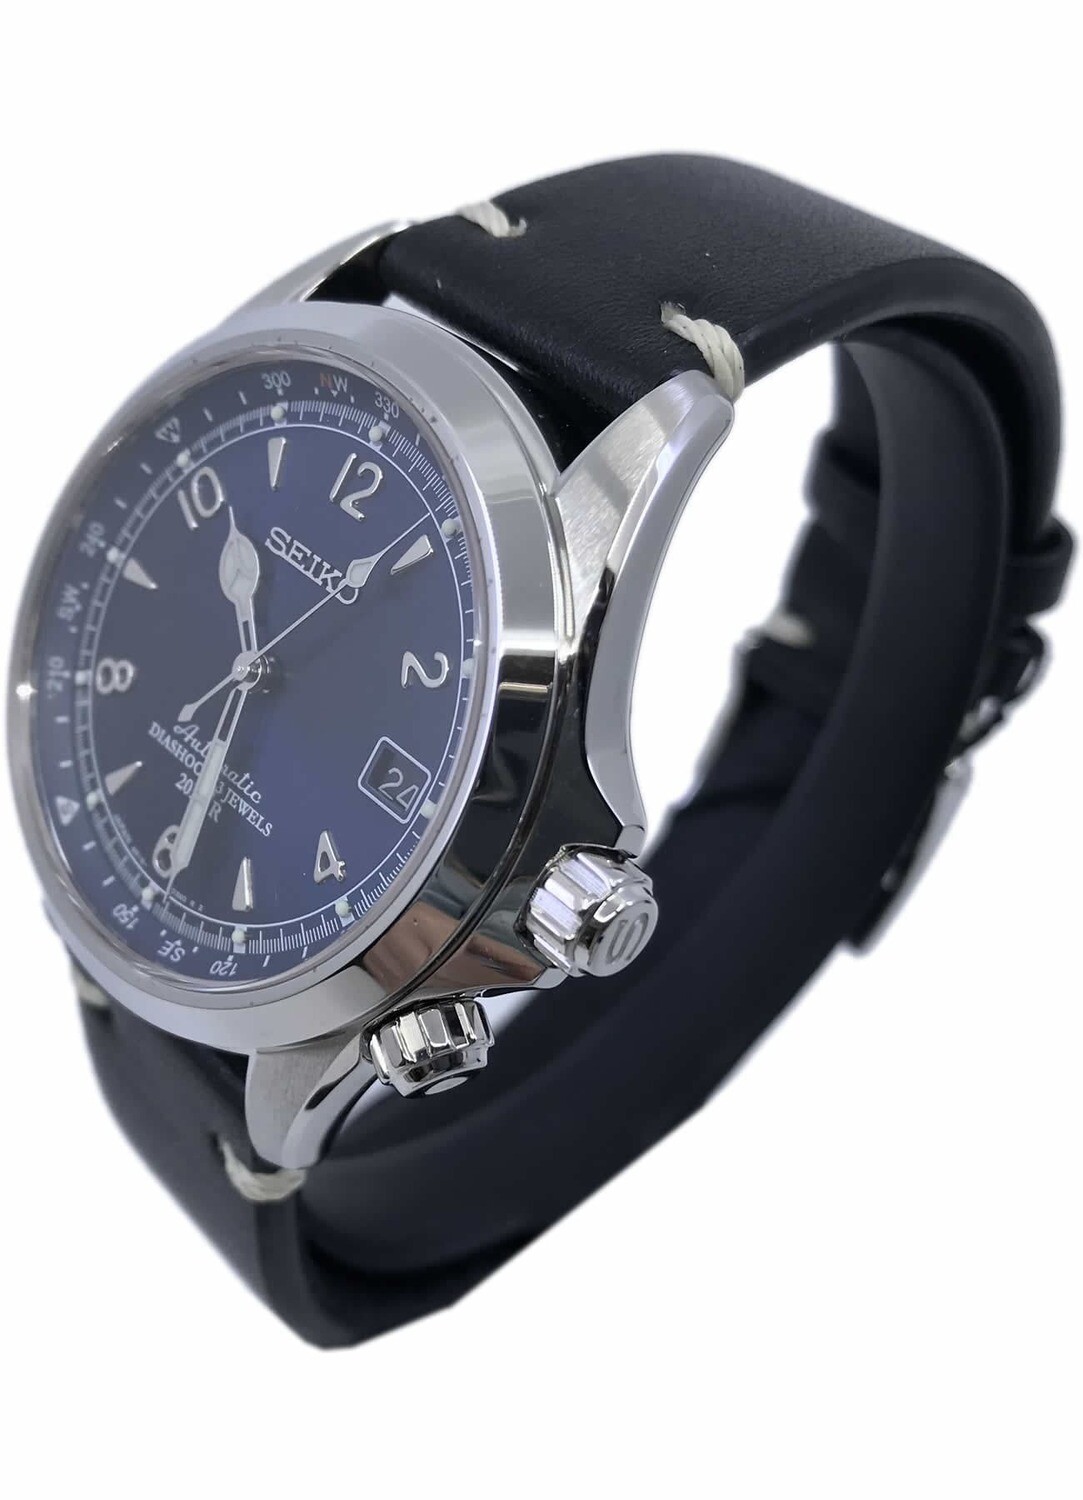 FS - Seiko Alpinist SBP089 Blue Dial Limited Edition | WatchUSeek Watch  Forums